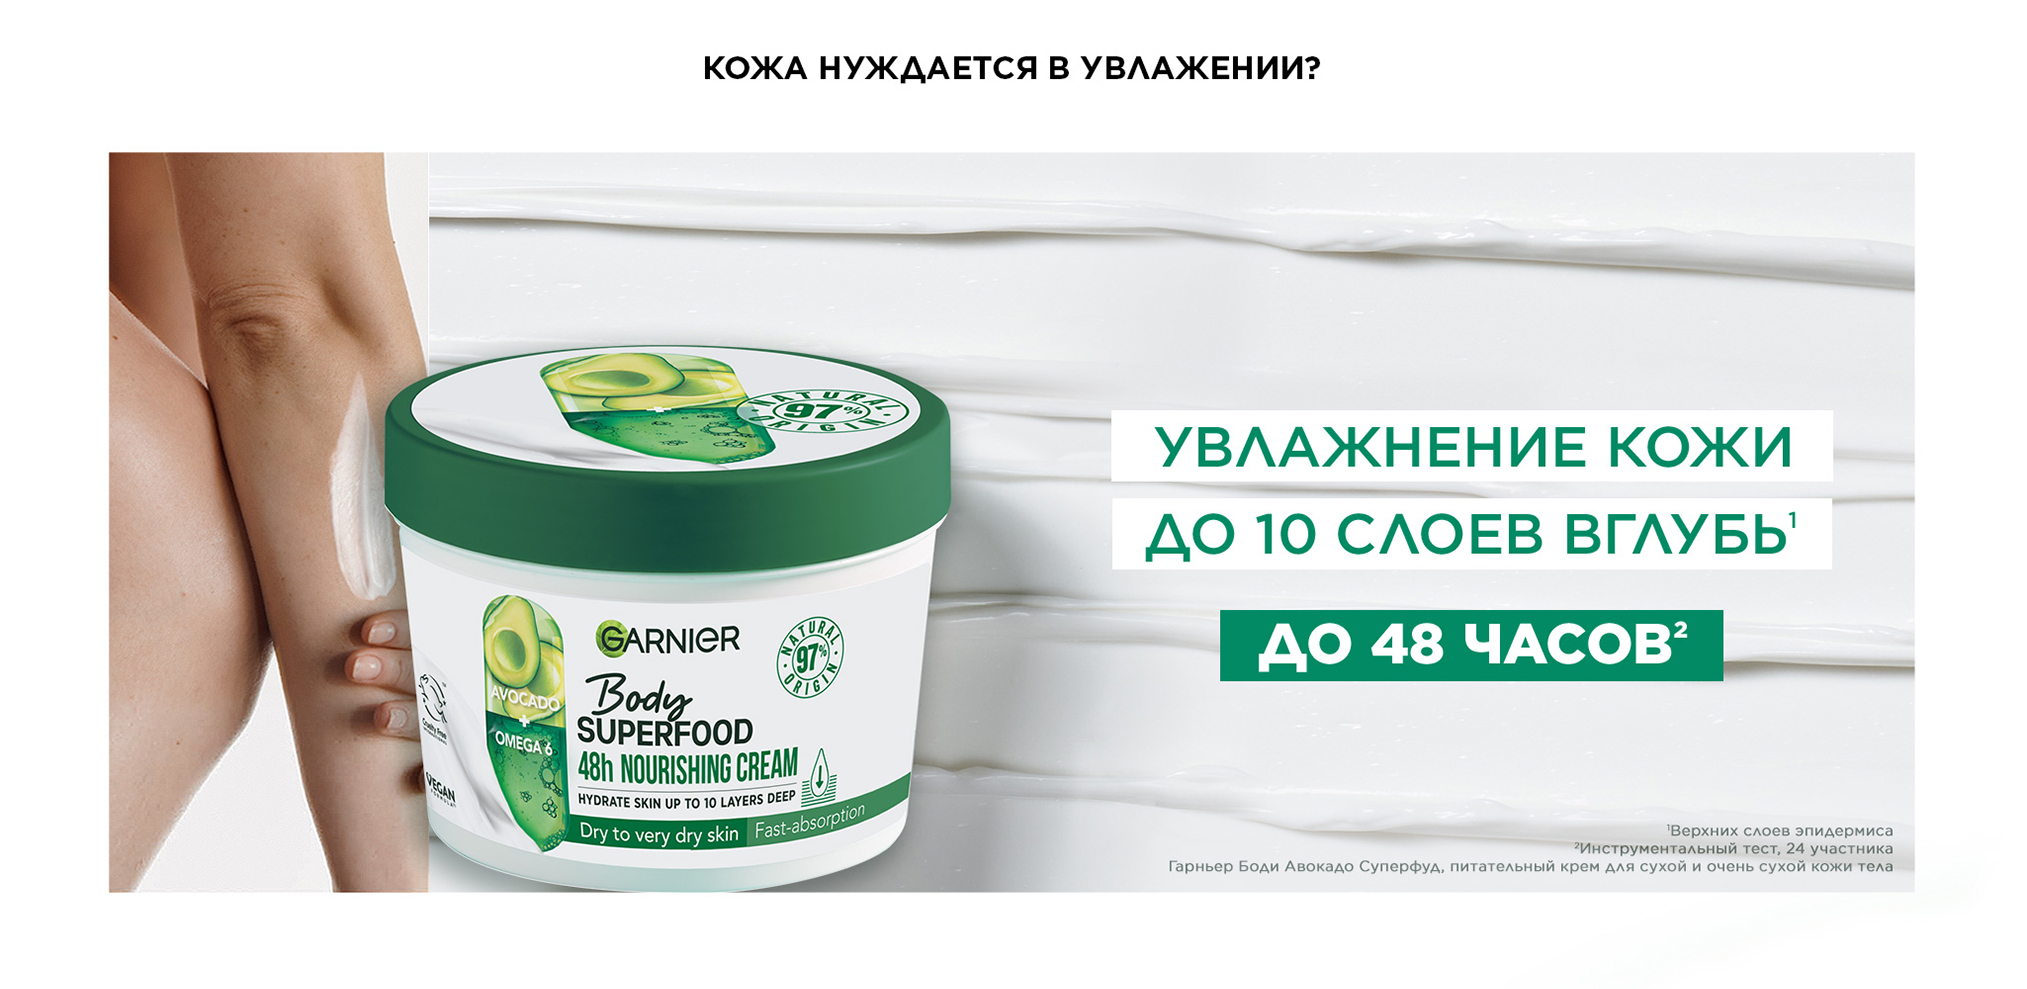 Garnier Body SuperFood Avocado Oil + Omega 6 Nourishing Cream